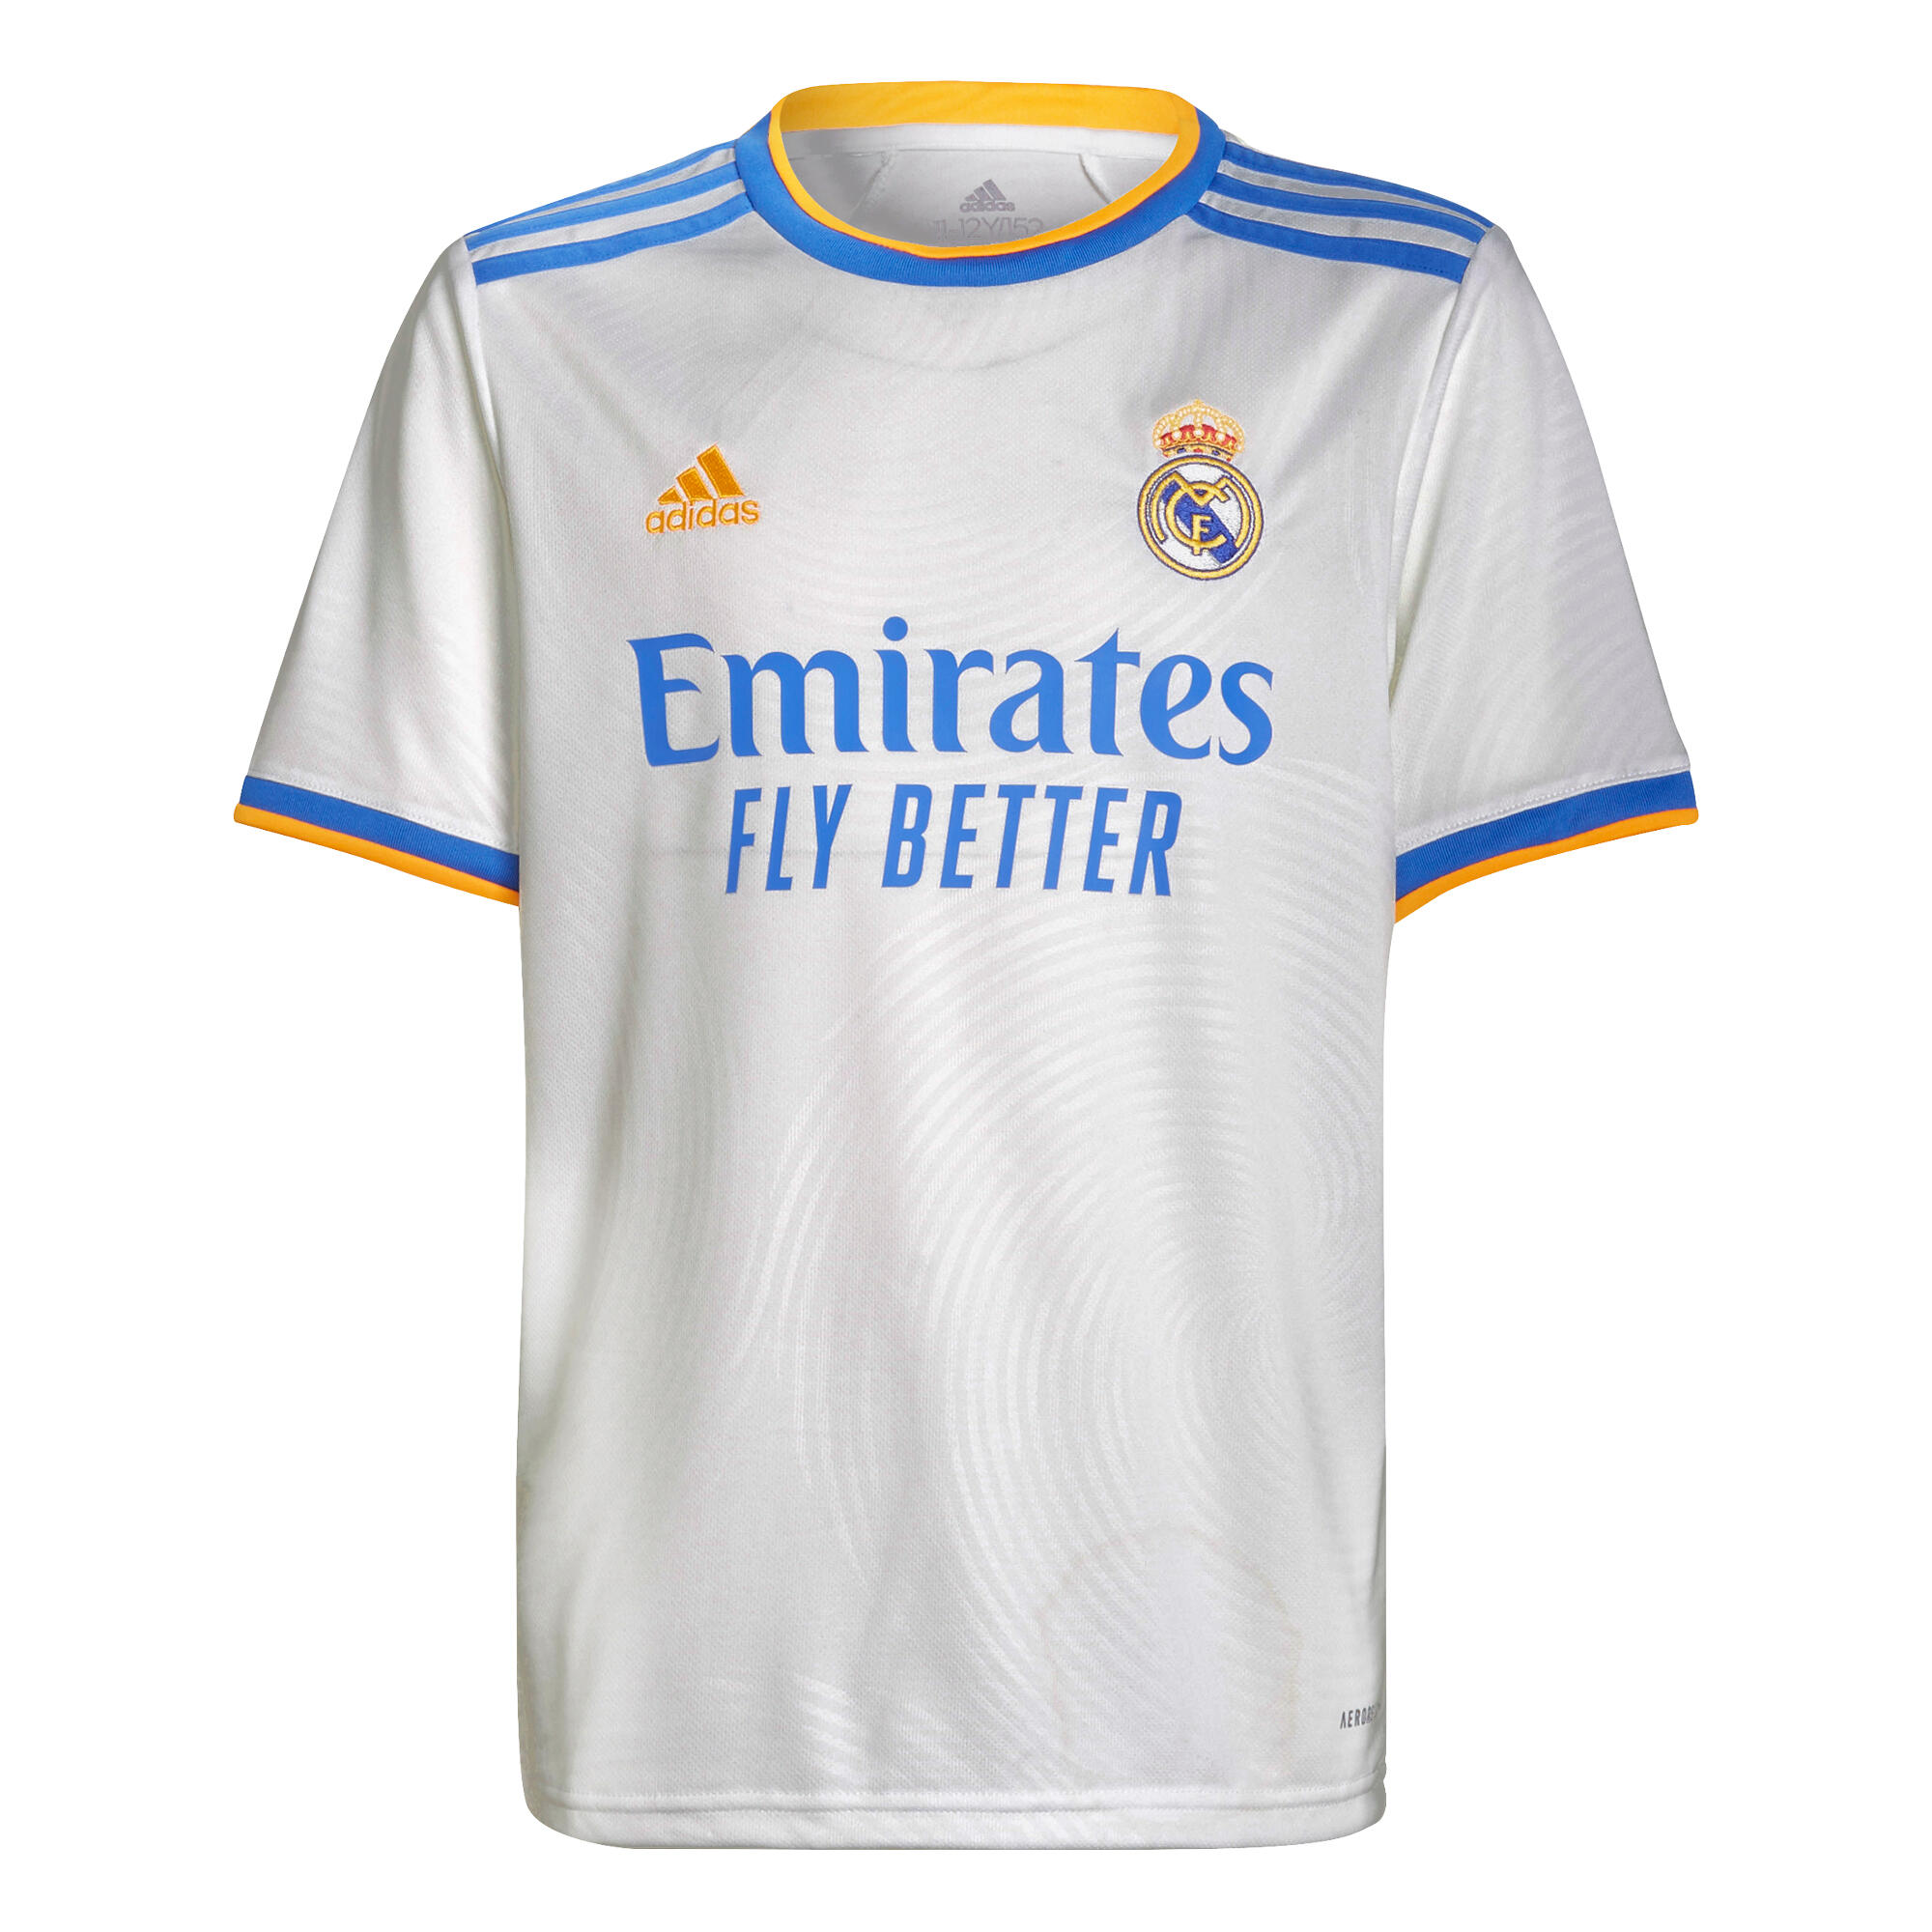 Real madrid купить футболку. Футболка adidas real Madrid. Футболка Реал Мадрид 2011-2012. Футболка Реал Мадрид 2021-2022. Реал футболка 21/22.